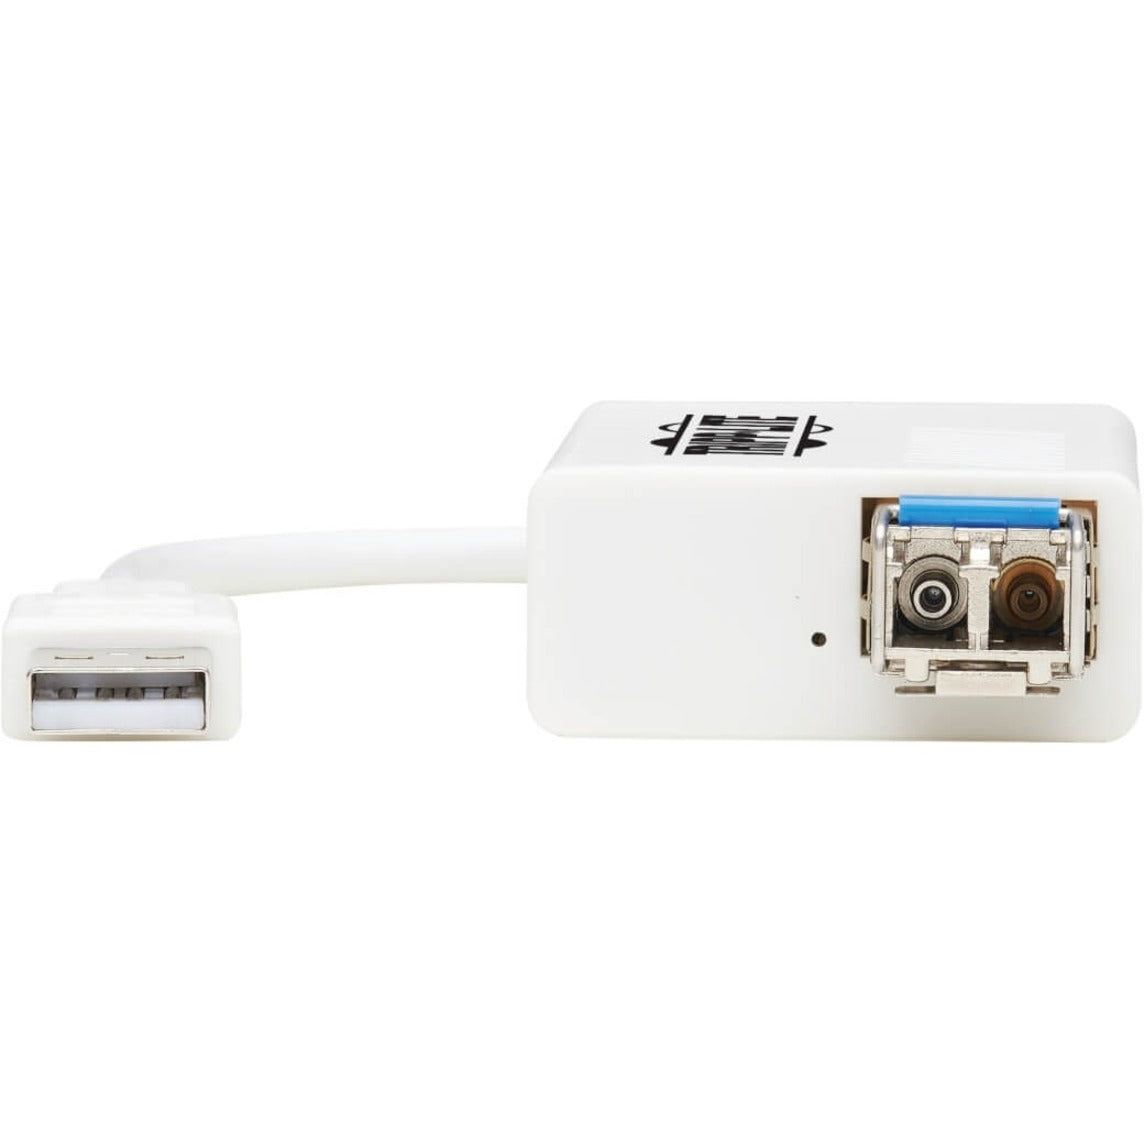 Tripp Lite U236-SMF-LC USB 2.0 ETHERNET NIC Adapter, LC SMF, 100Base-FX